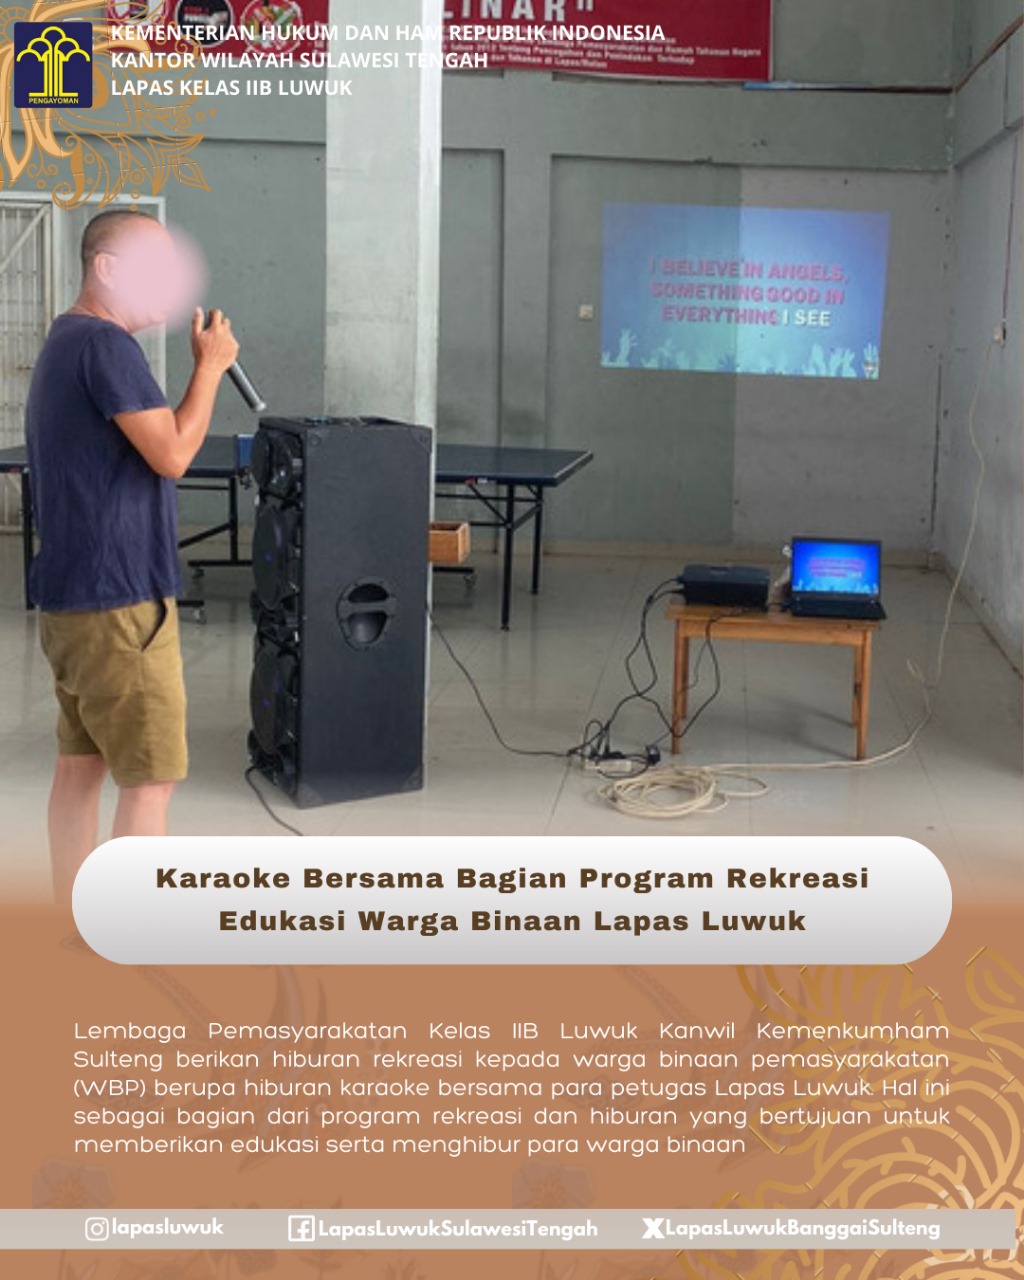 Karaoke Bersama Bagian Program Rekreasi Edukasi Warga Binaan Lapas Luwuk